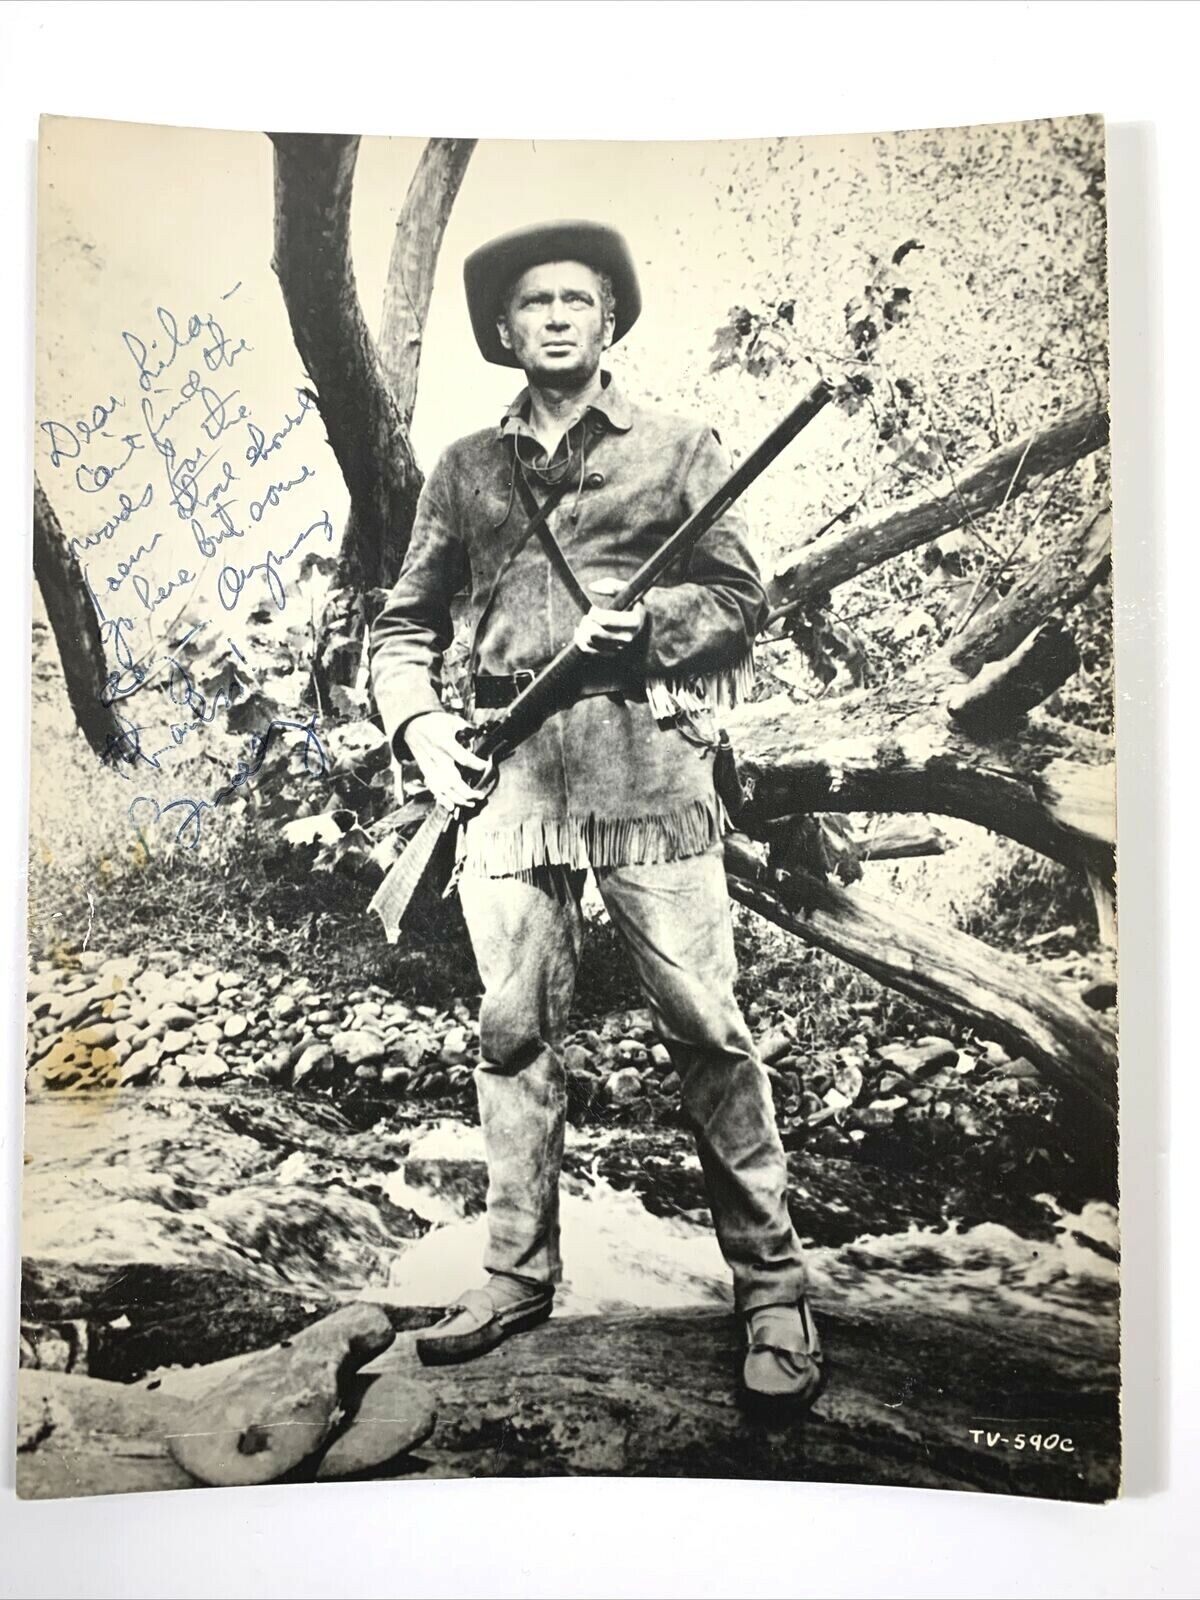 Buddy Ebsen Disney Davy Crockett 1955 Autographed 8x10 Photo B&W personal msg